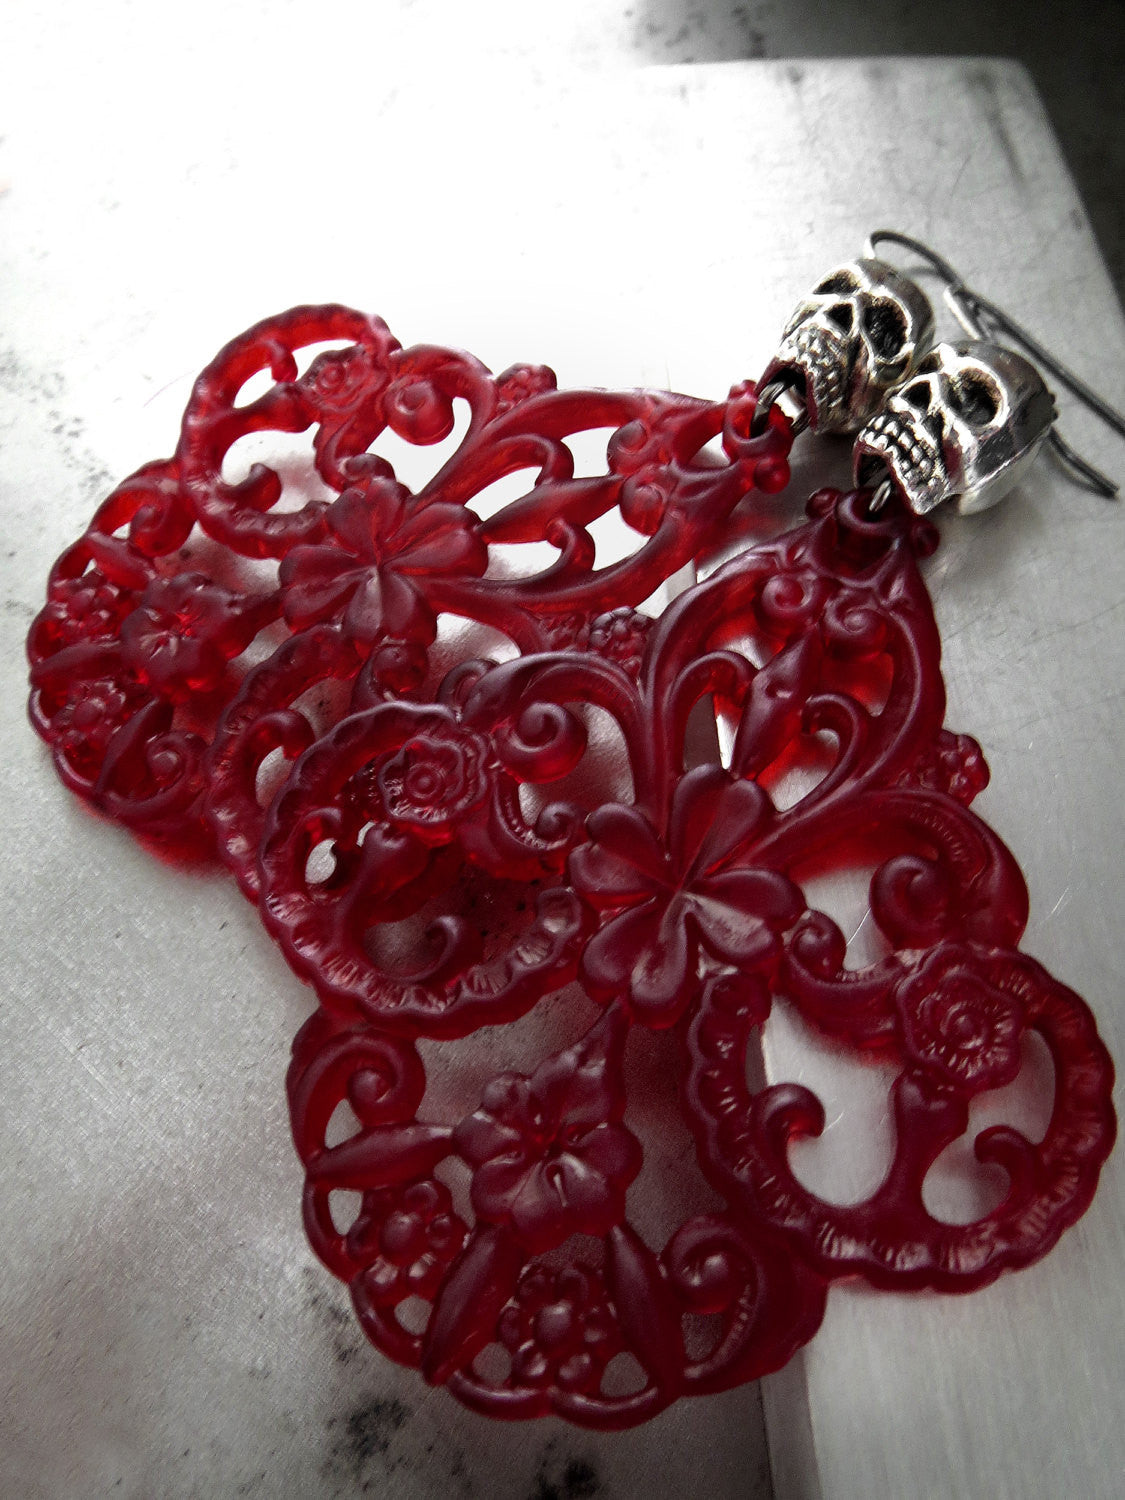 WICKED - Blood Red Chandelier Earrings with Silver Skulls